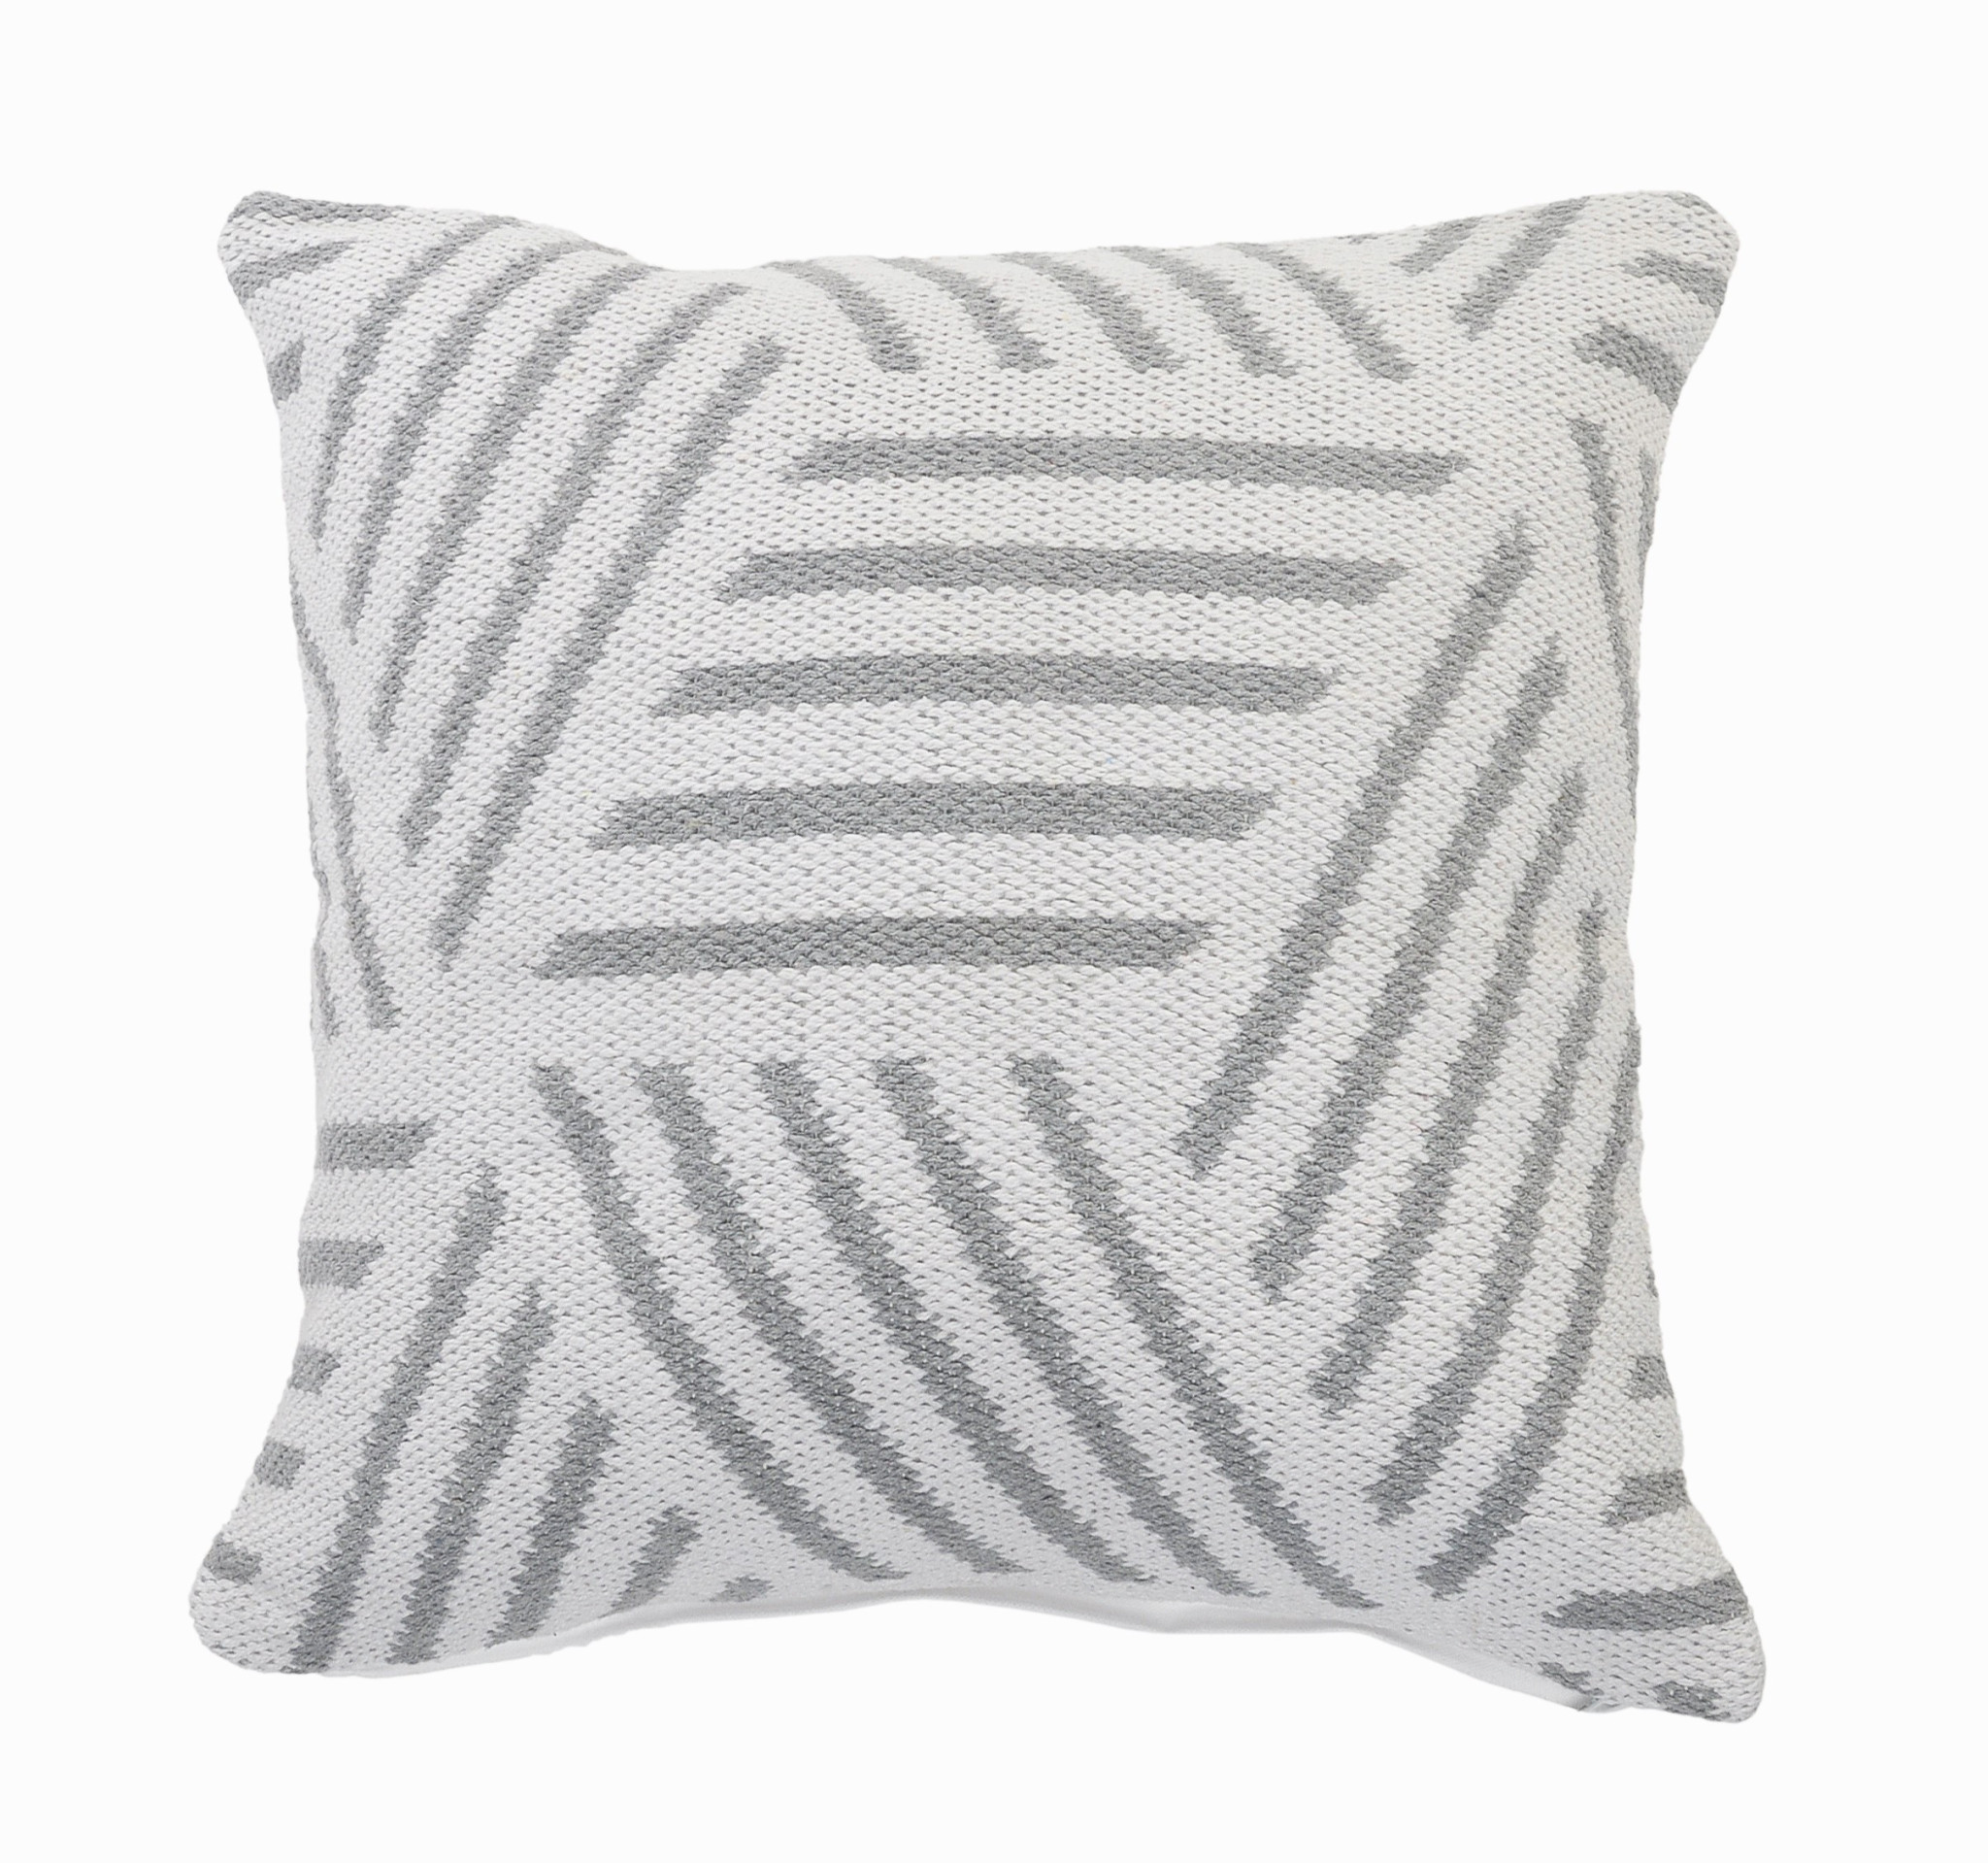 20" X 20" Gray And White 100% Cotton Geometric Zippered Pillow-516810-1